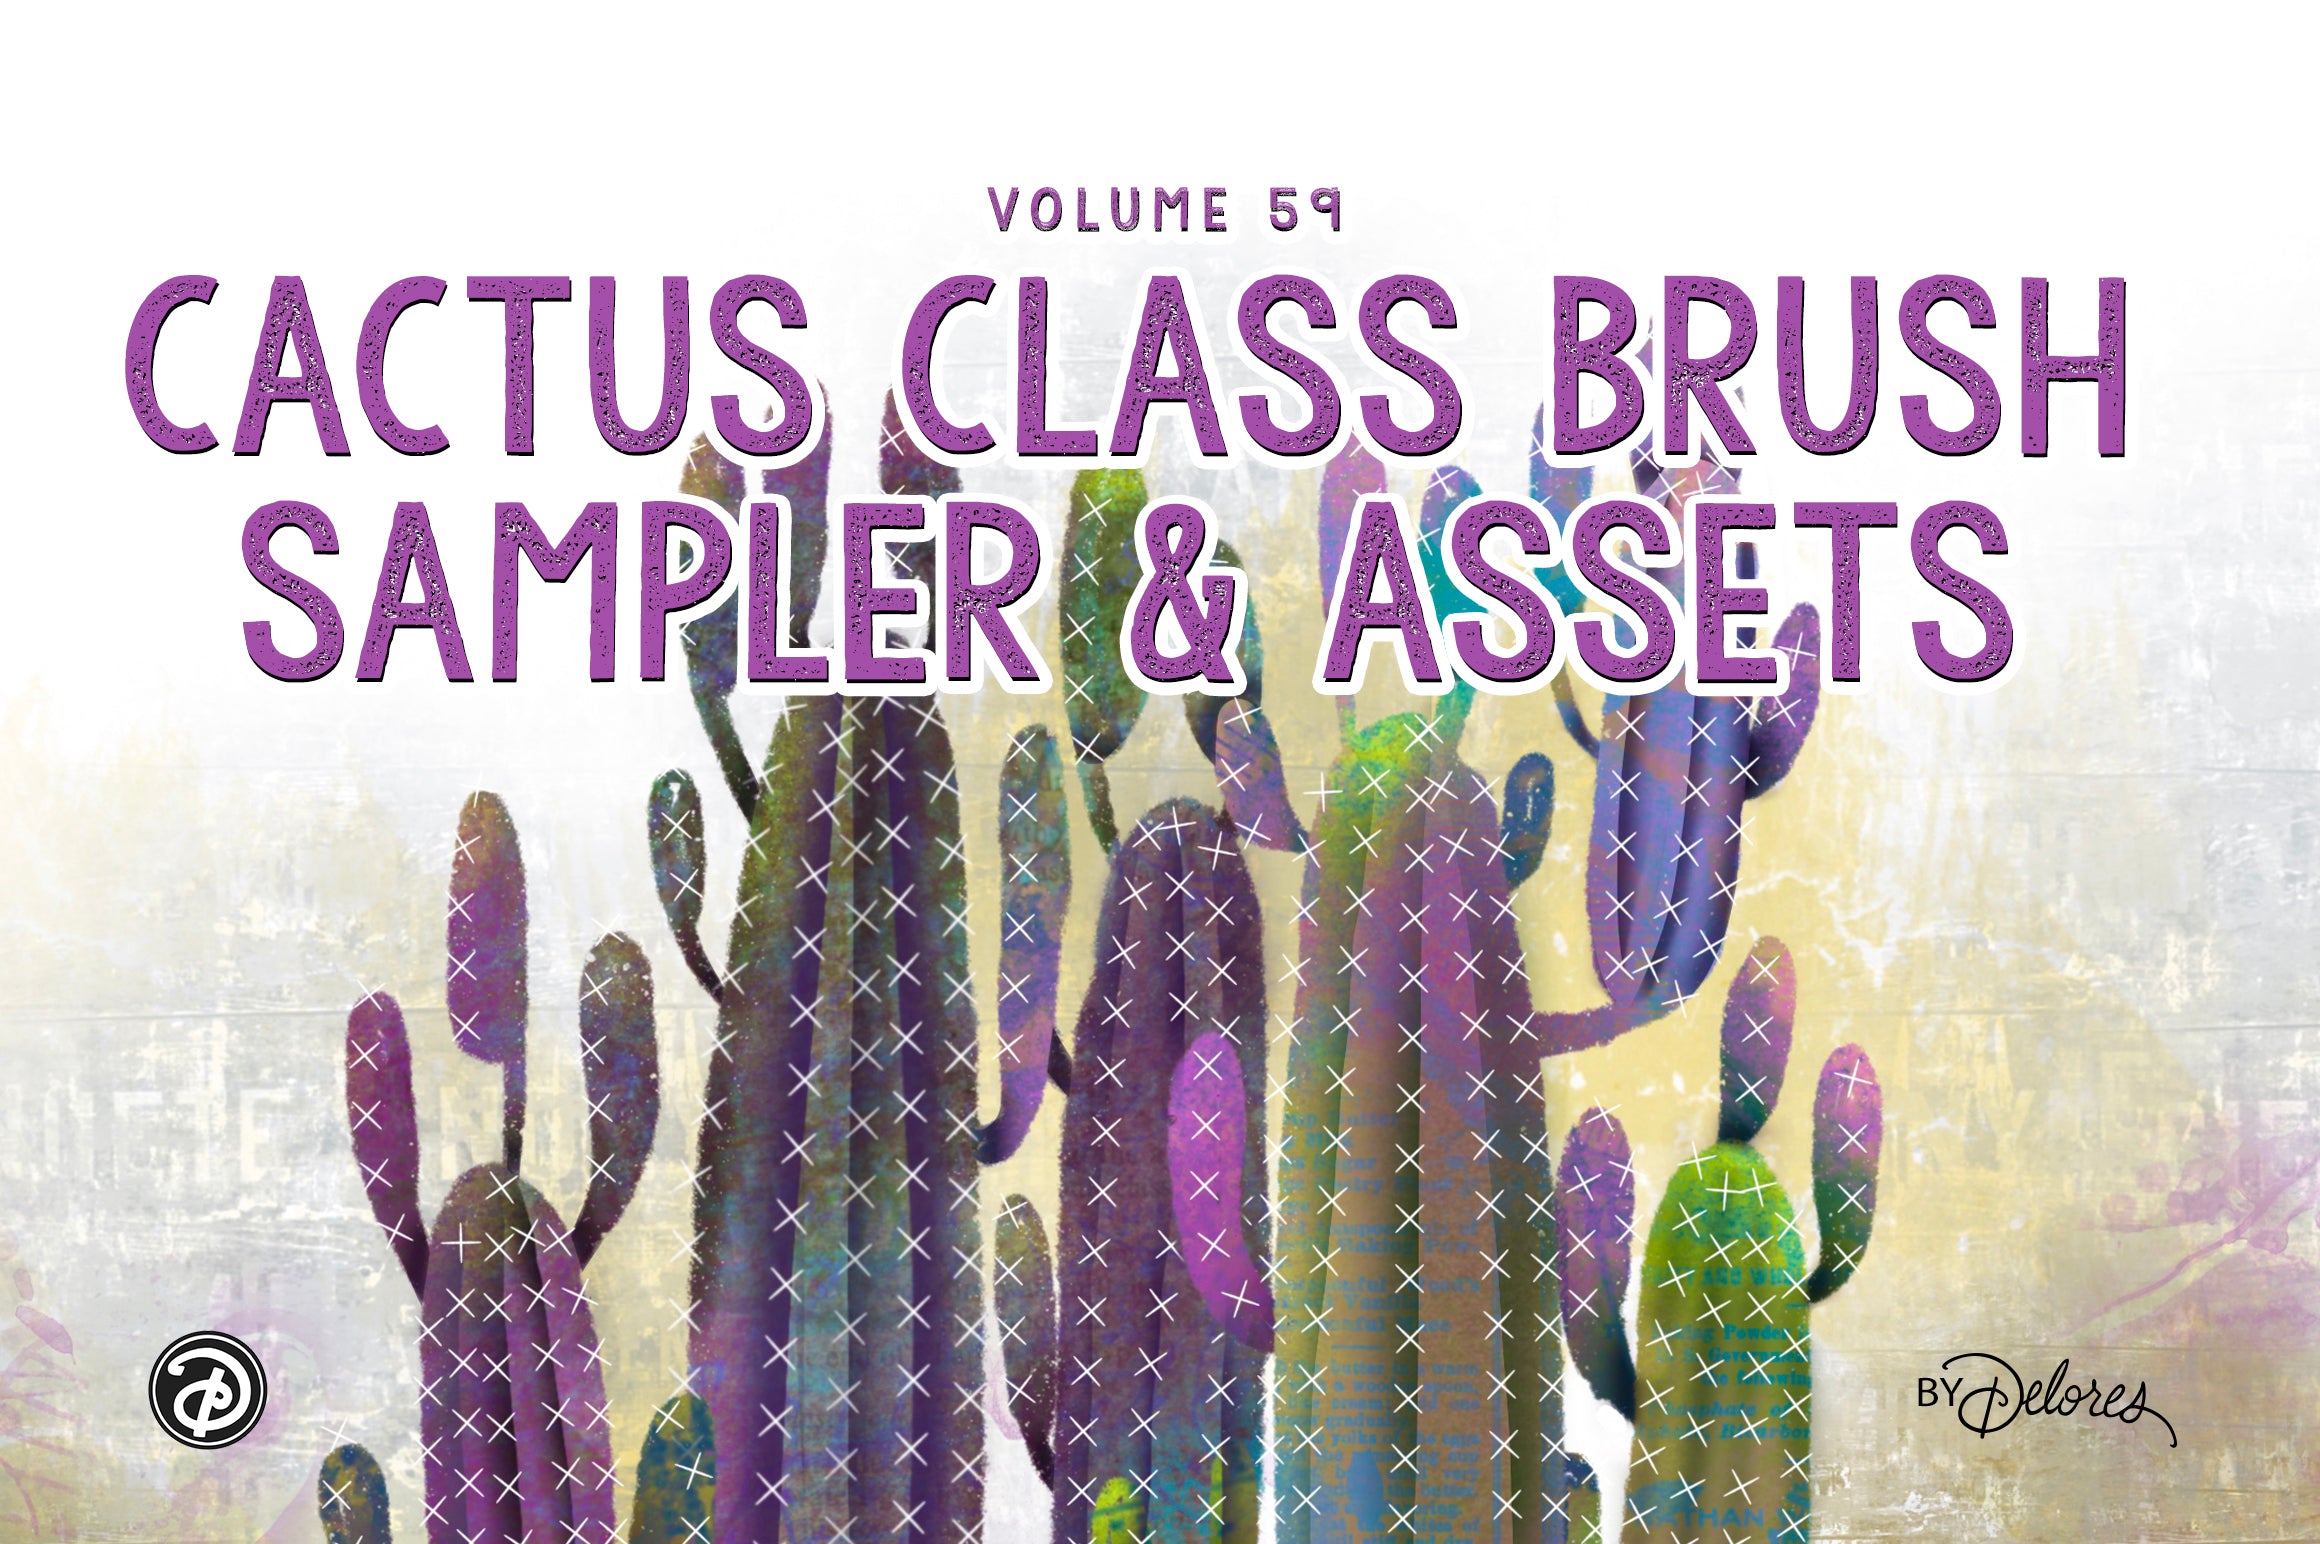 Volume 60 - Cactus Class Brush Sampler